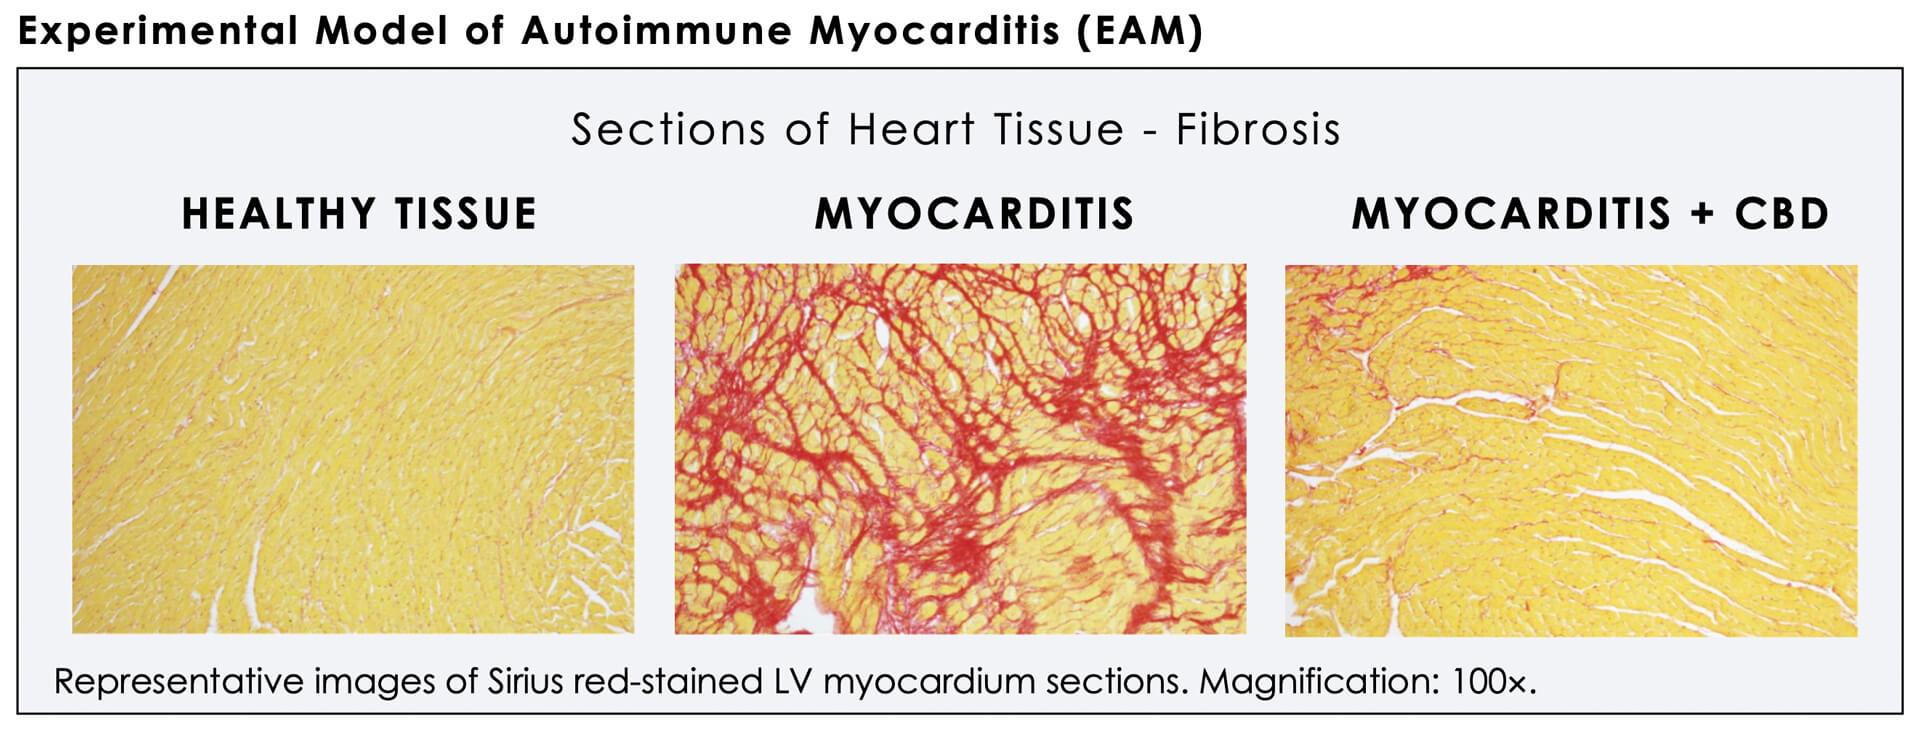 myocarditis